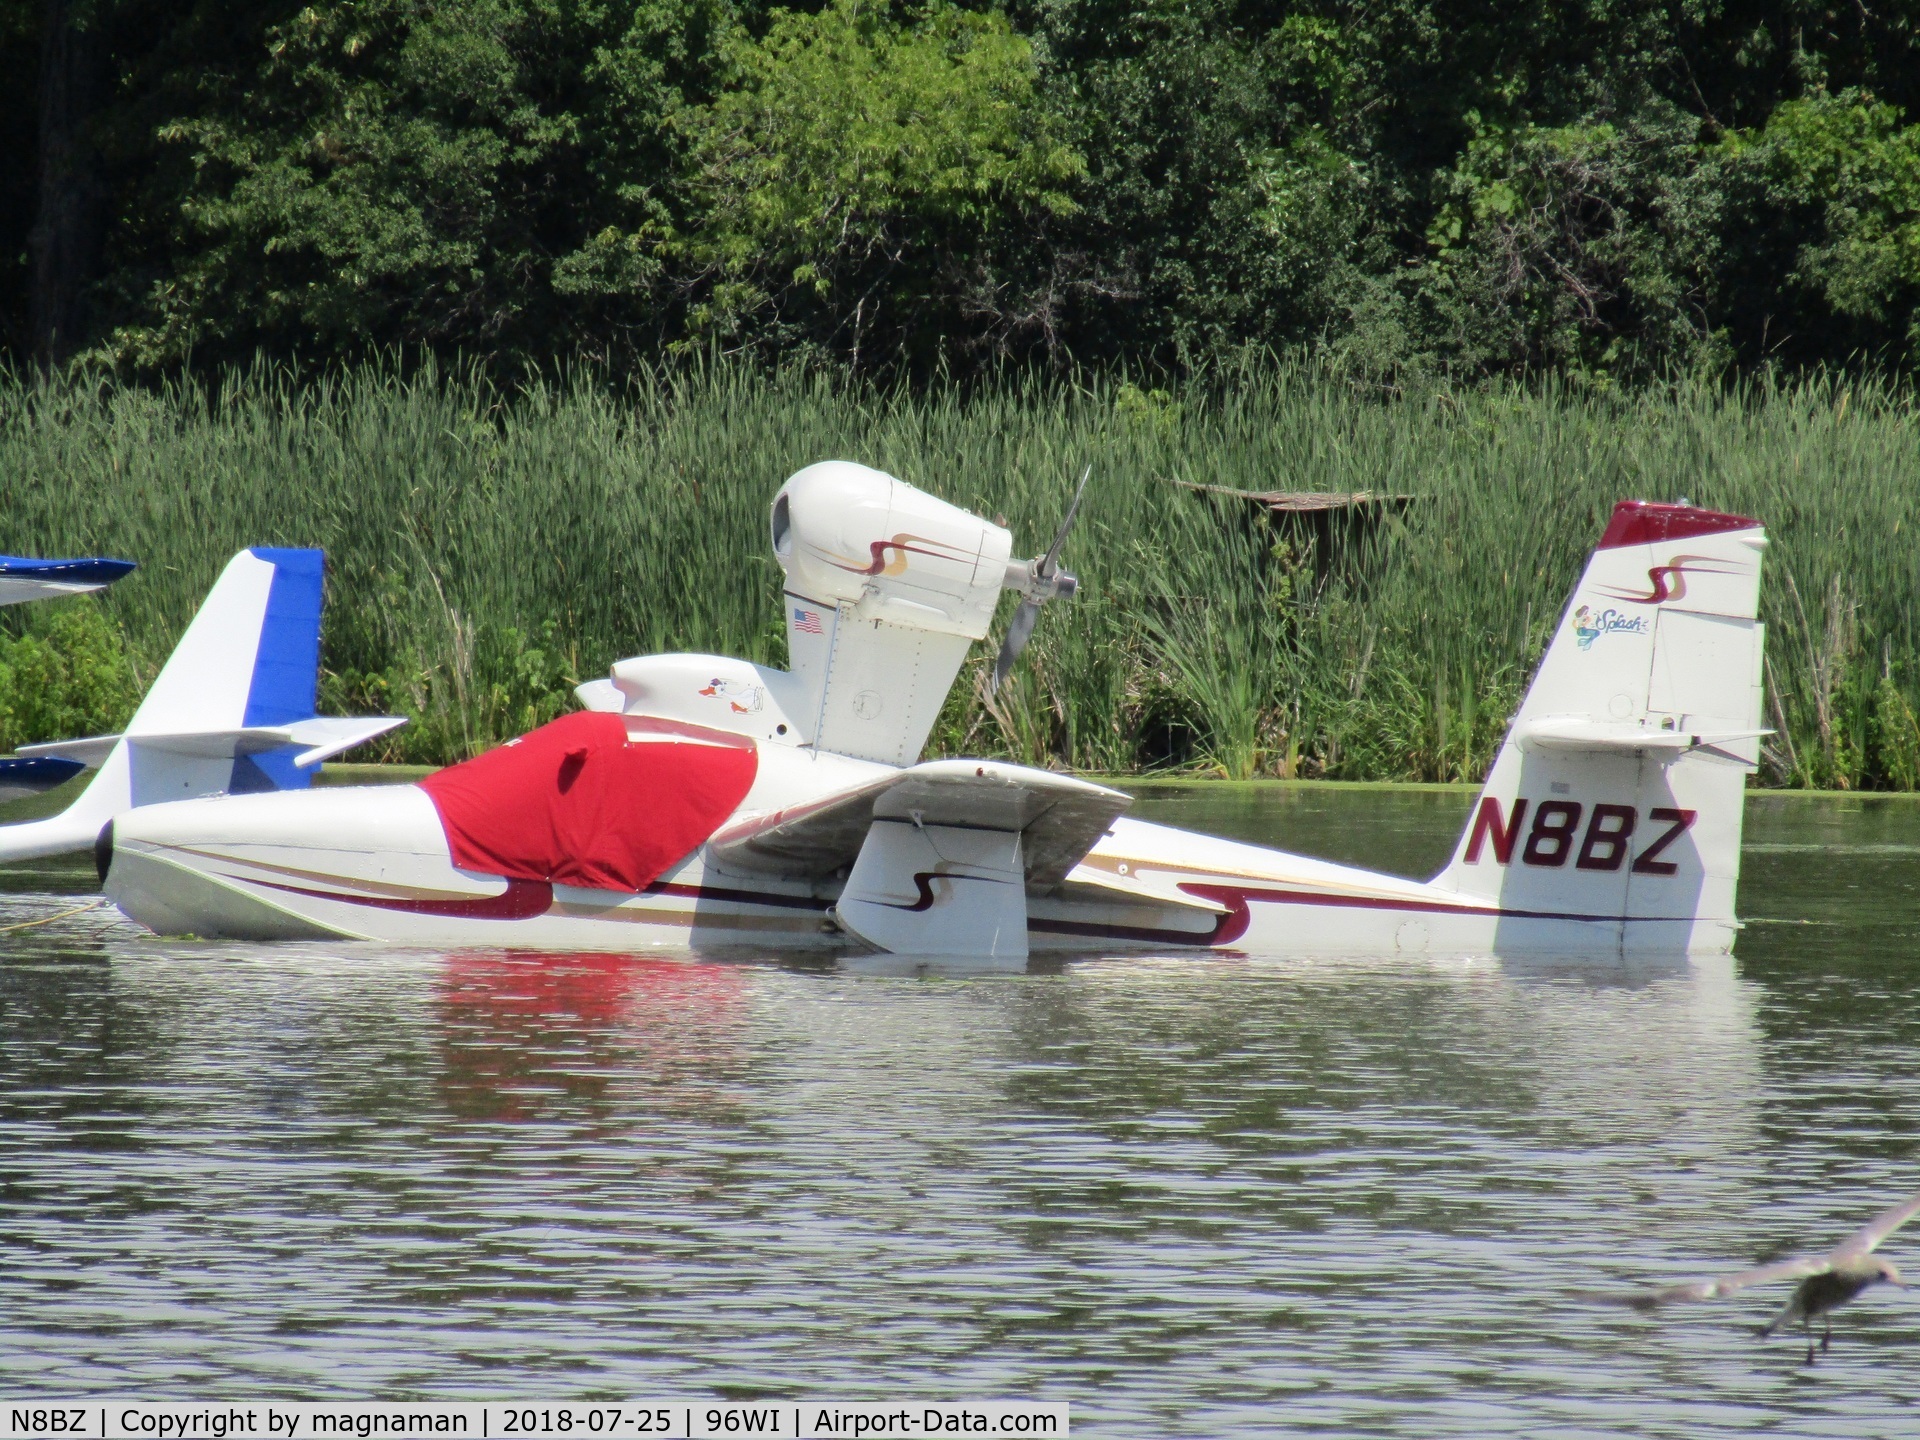 N8BZ, 1976 Consolidated Aeronautics Inc. Lake LA-4-200 C/N 761, just floating!